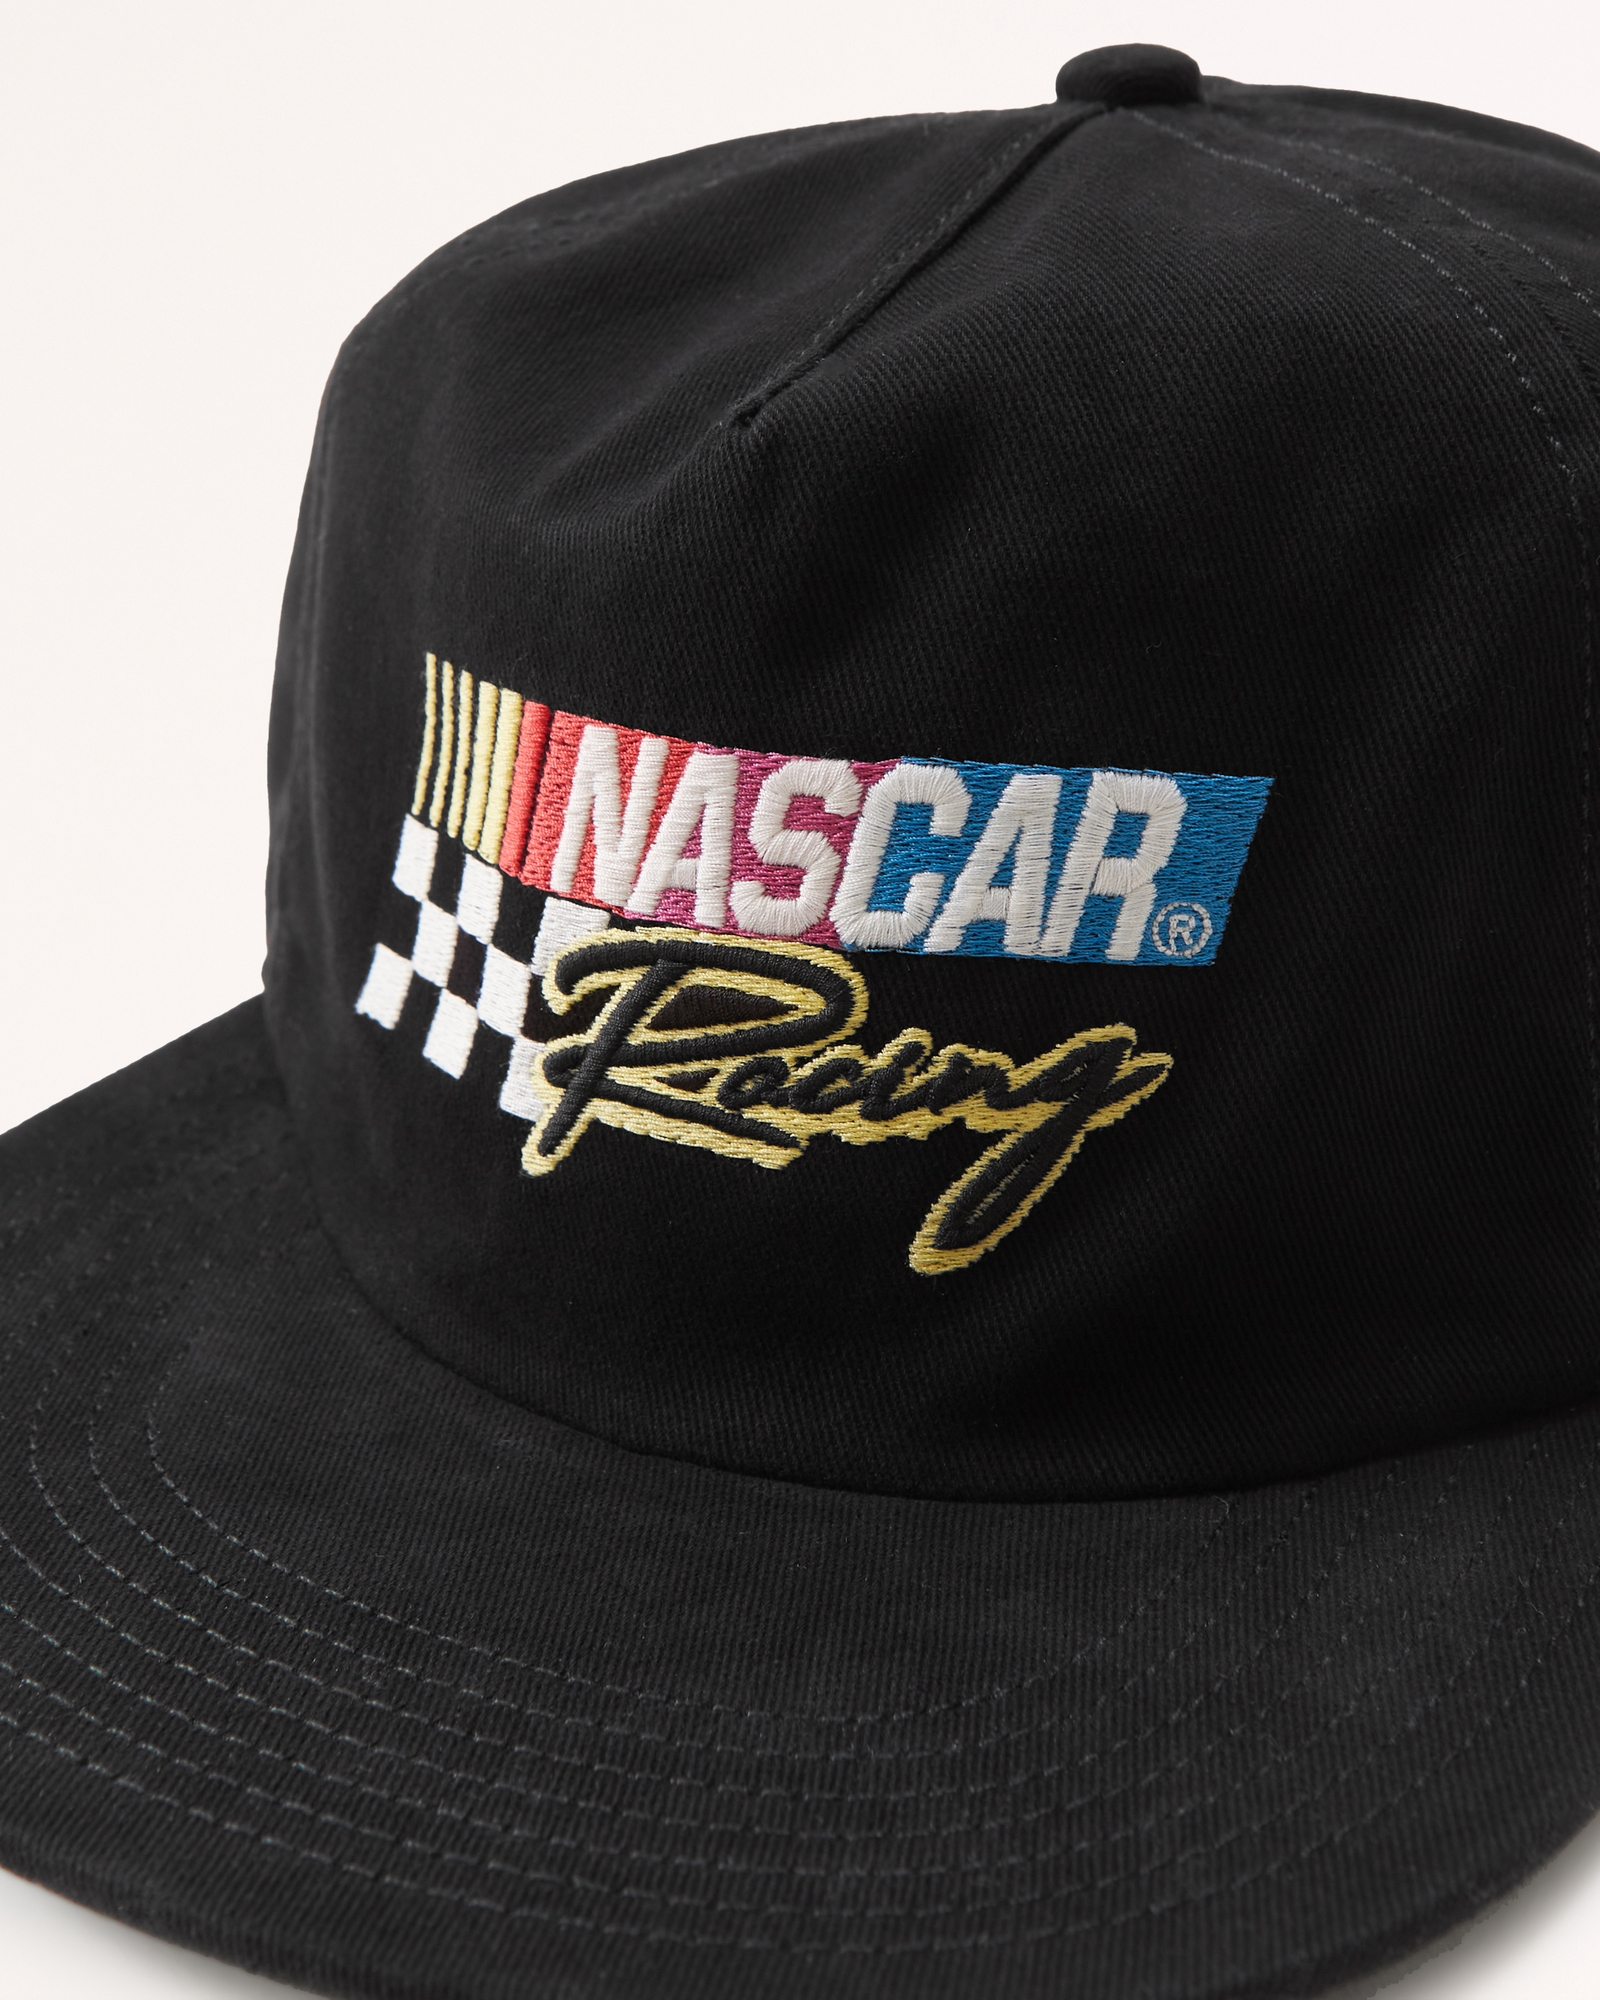 NASCAR Graphic Flat Bill Hat